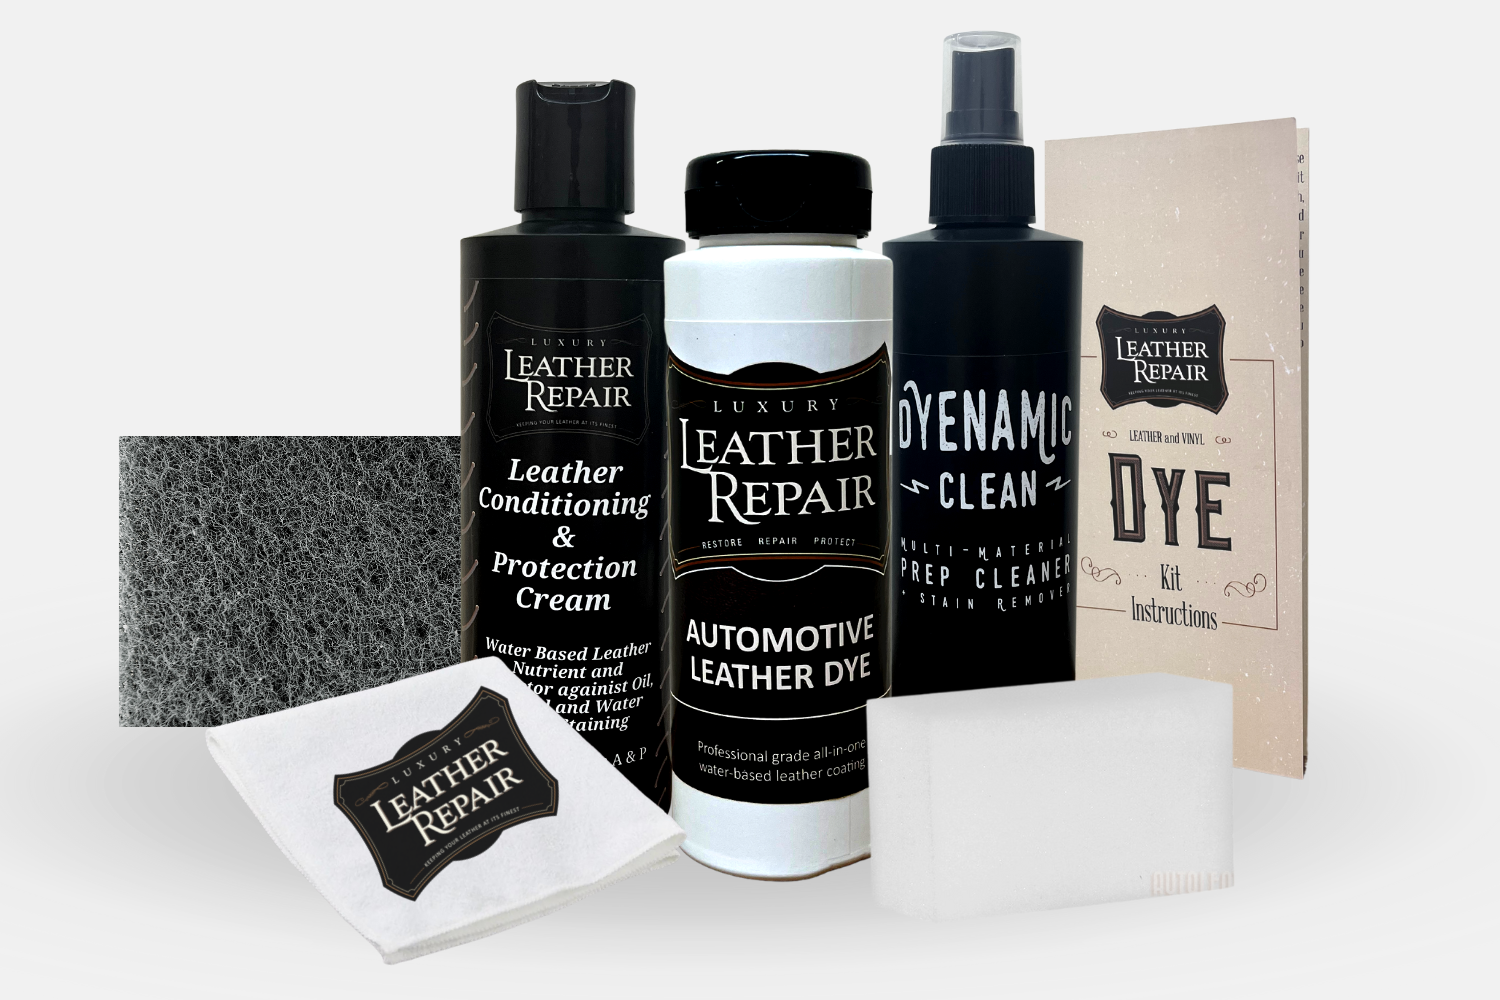 Black - Leather Dye Kit from Hessen Antique